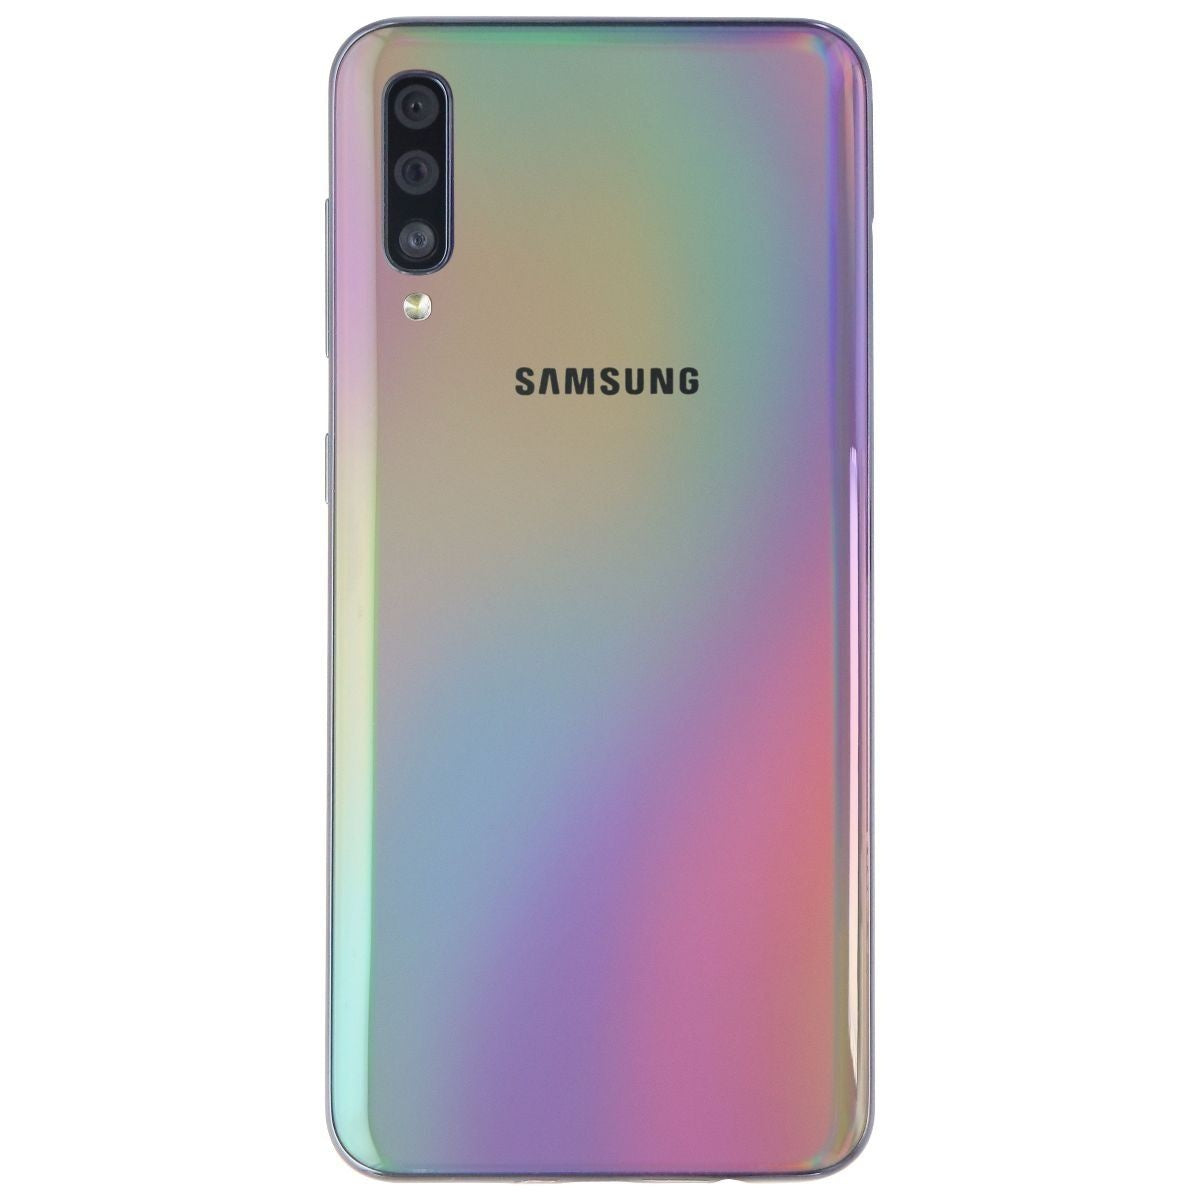 Samsung Galaxy A50 (6.4-in) Smartphone (SM-A505U) GSM + CDMA - 64GB / Black Cell Phones & Smartphones Samsung    - Simple Cell Bulk Wholesale Pricing - USA Seller